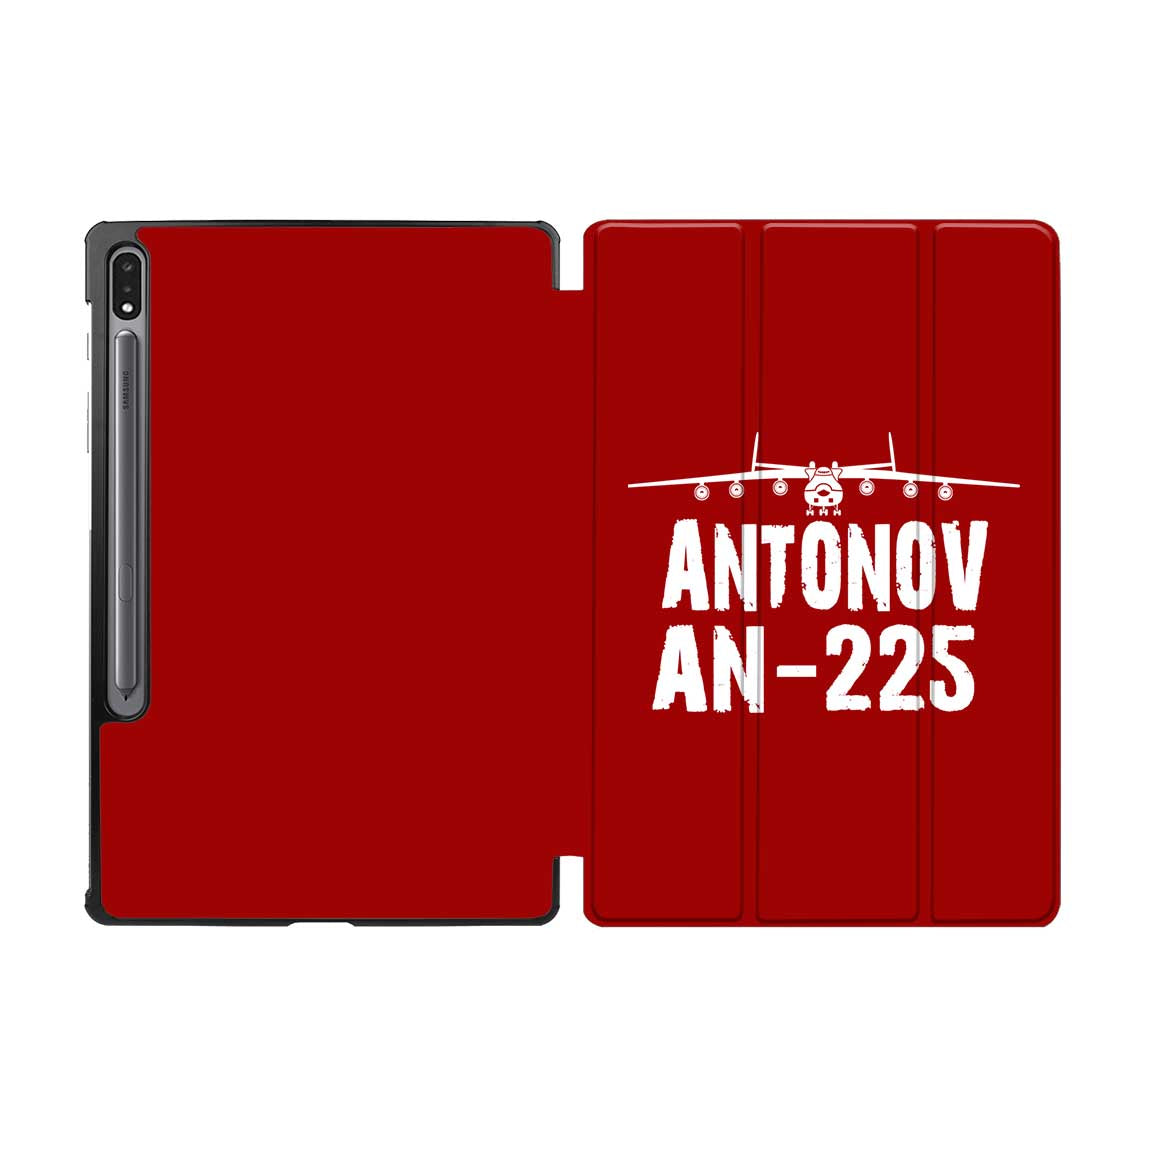 Antonov AN-225 & Plane Designed Samsung Tablet Cases